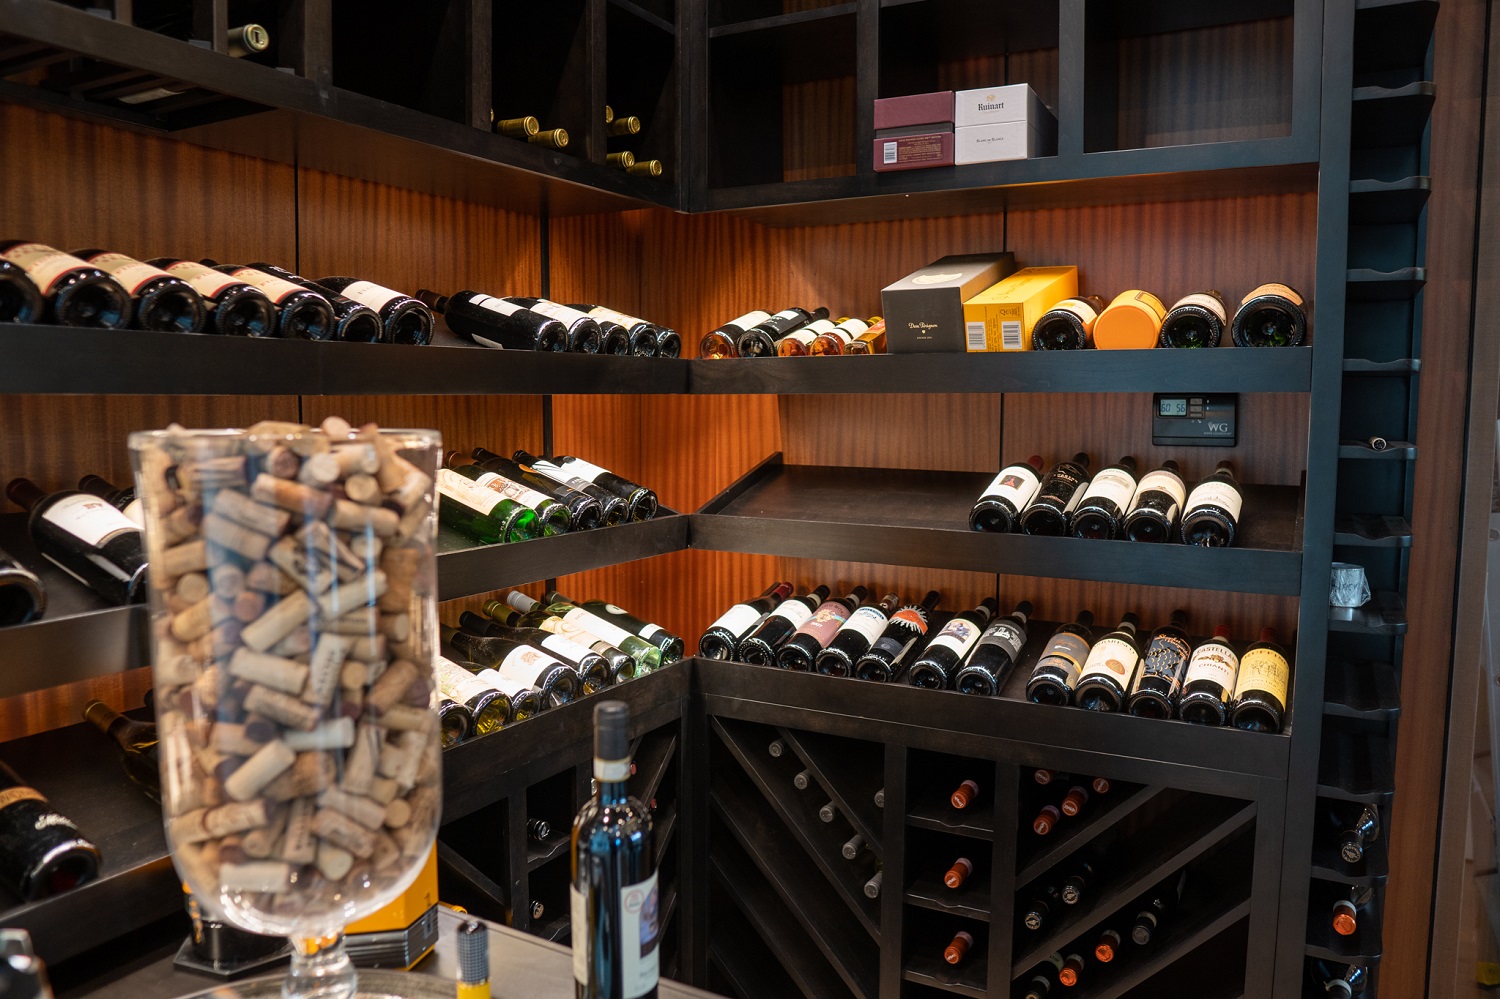 Our Custom Wine Cellars San Diego Designers Provide Quality Yet Budget-Friendly Wine Racks